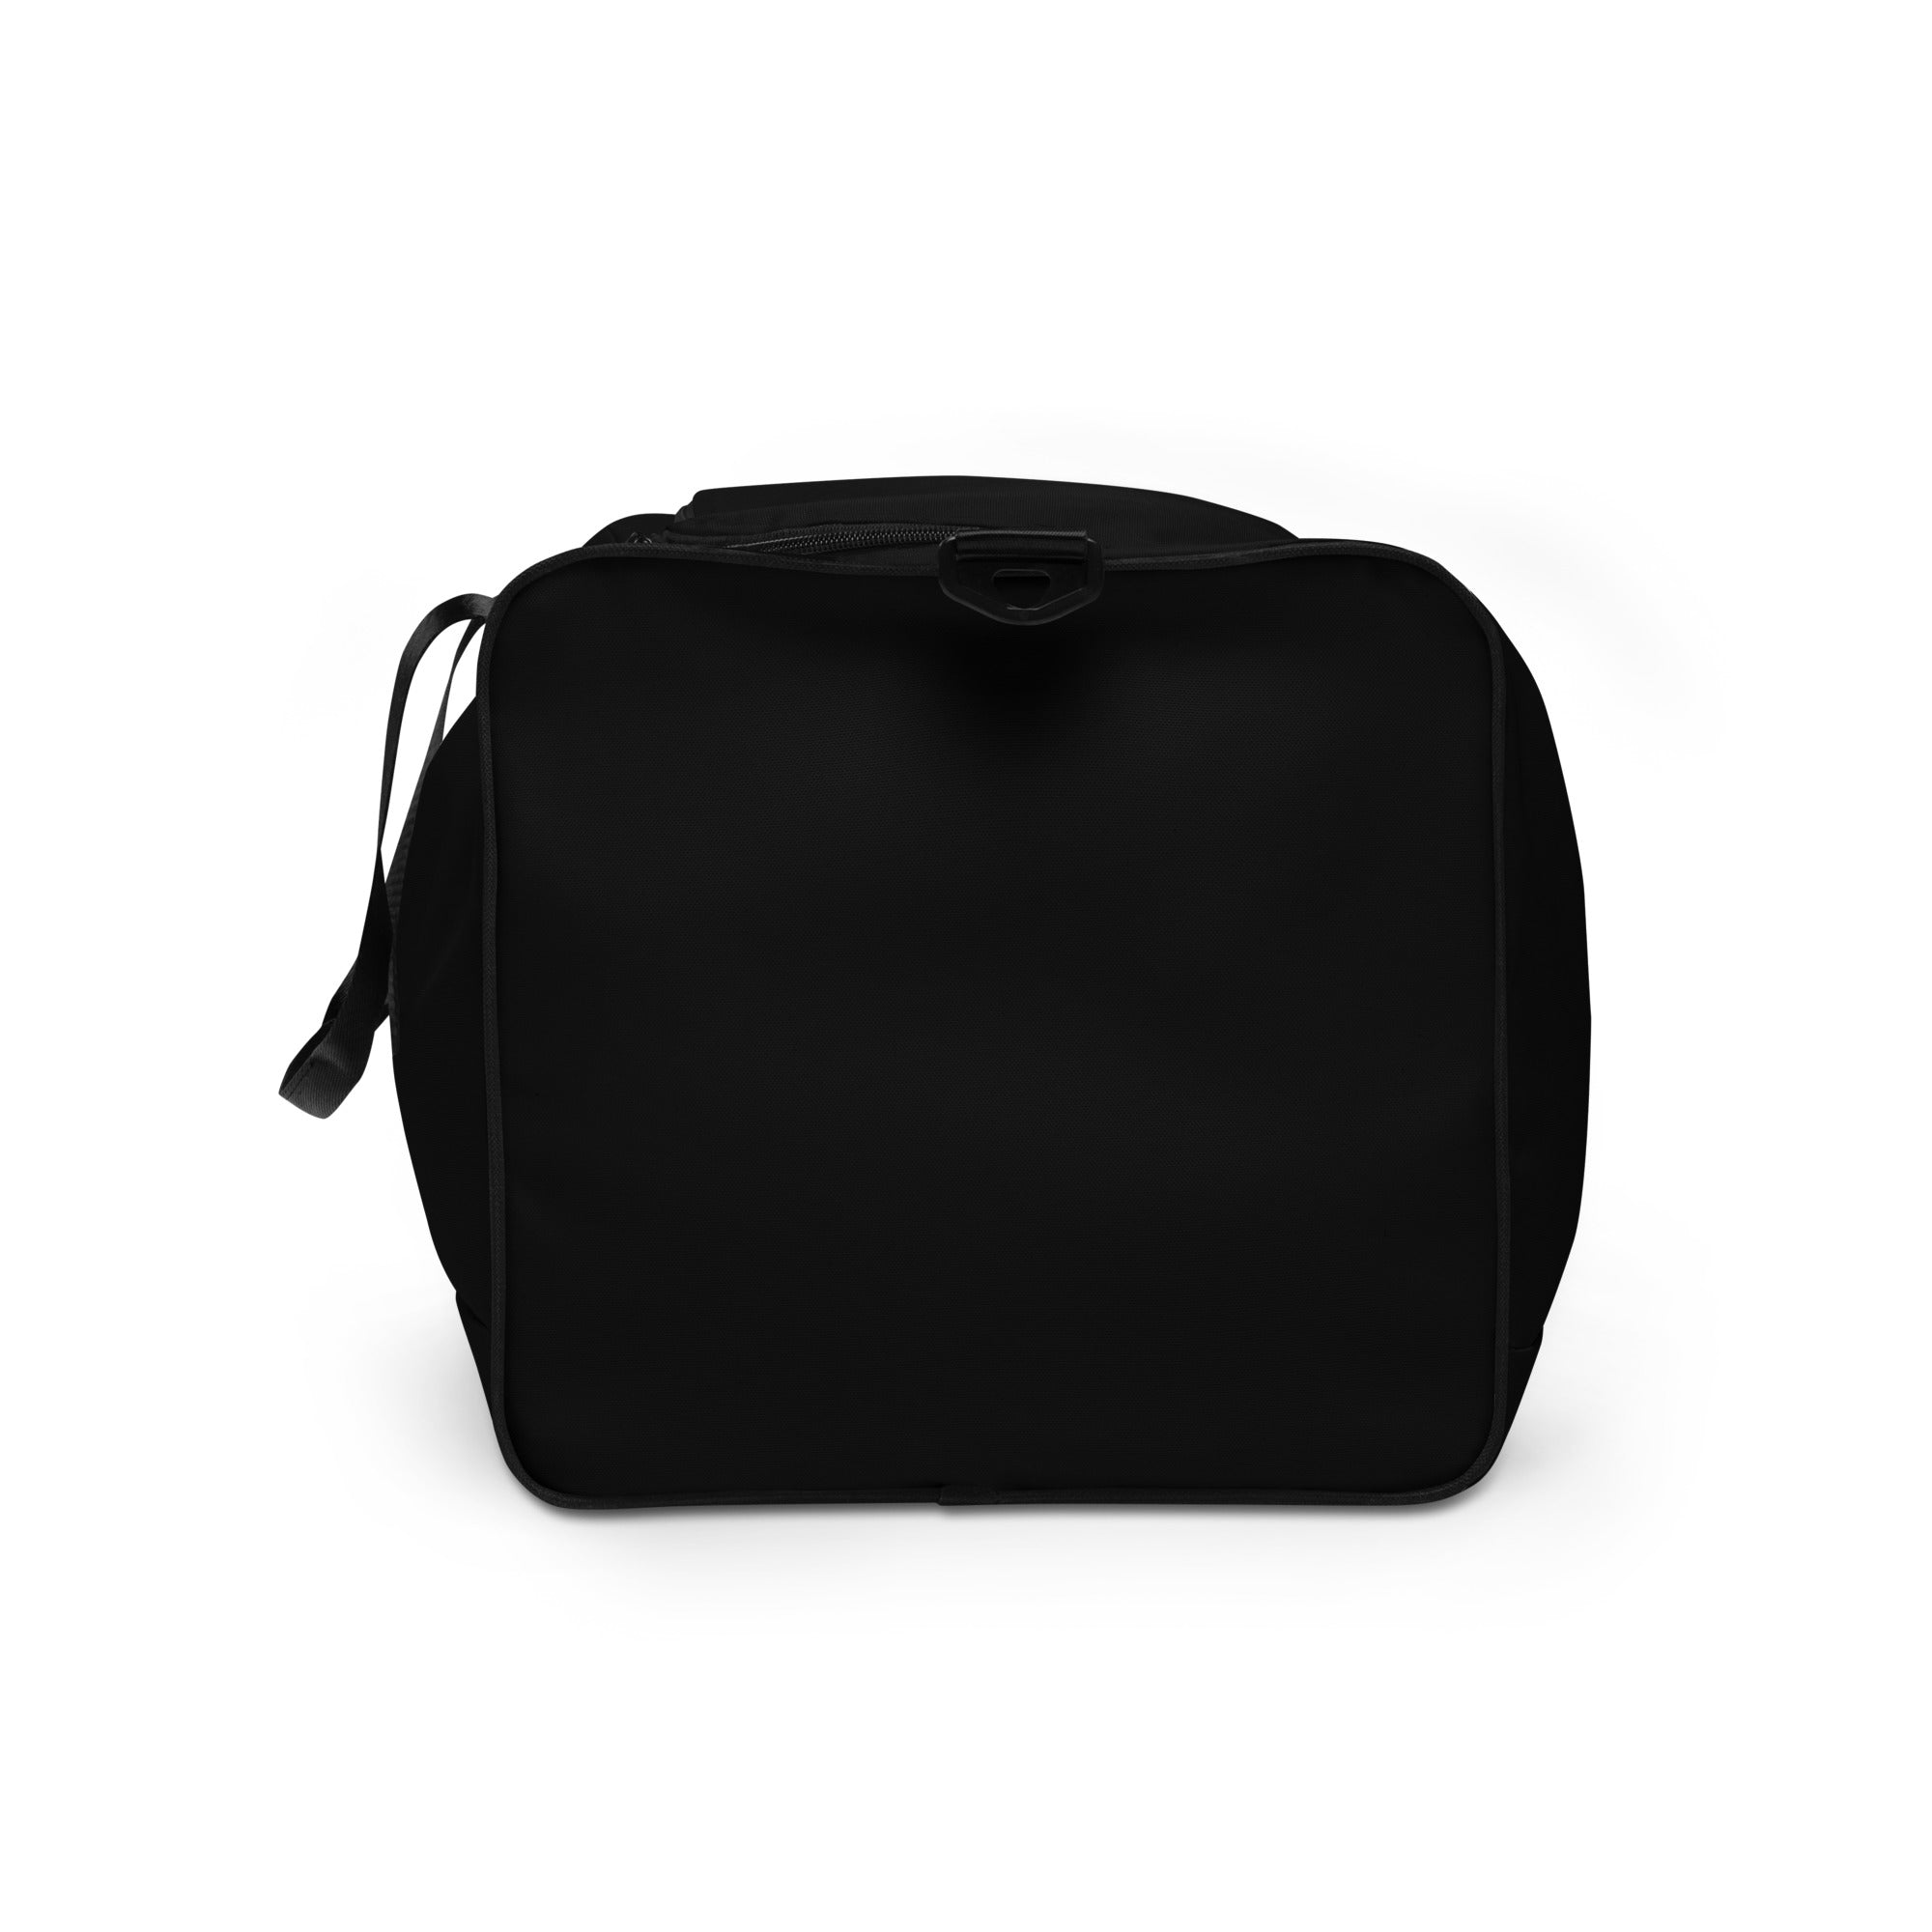 ANTEPRIMA Contrast Is Important I.O. Light Fabric Reversible Tote Purse Bag  | eBay